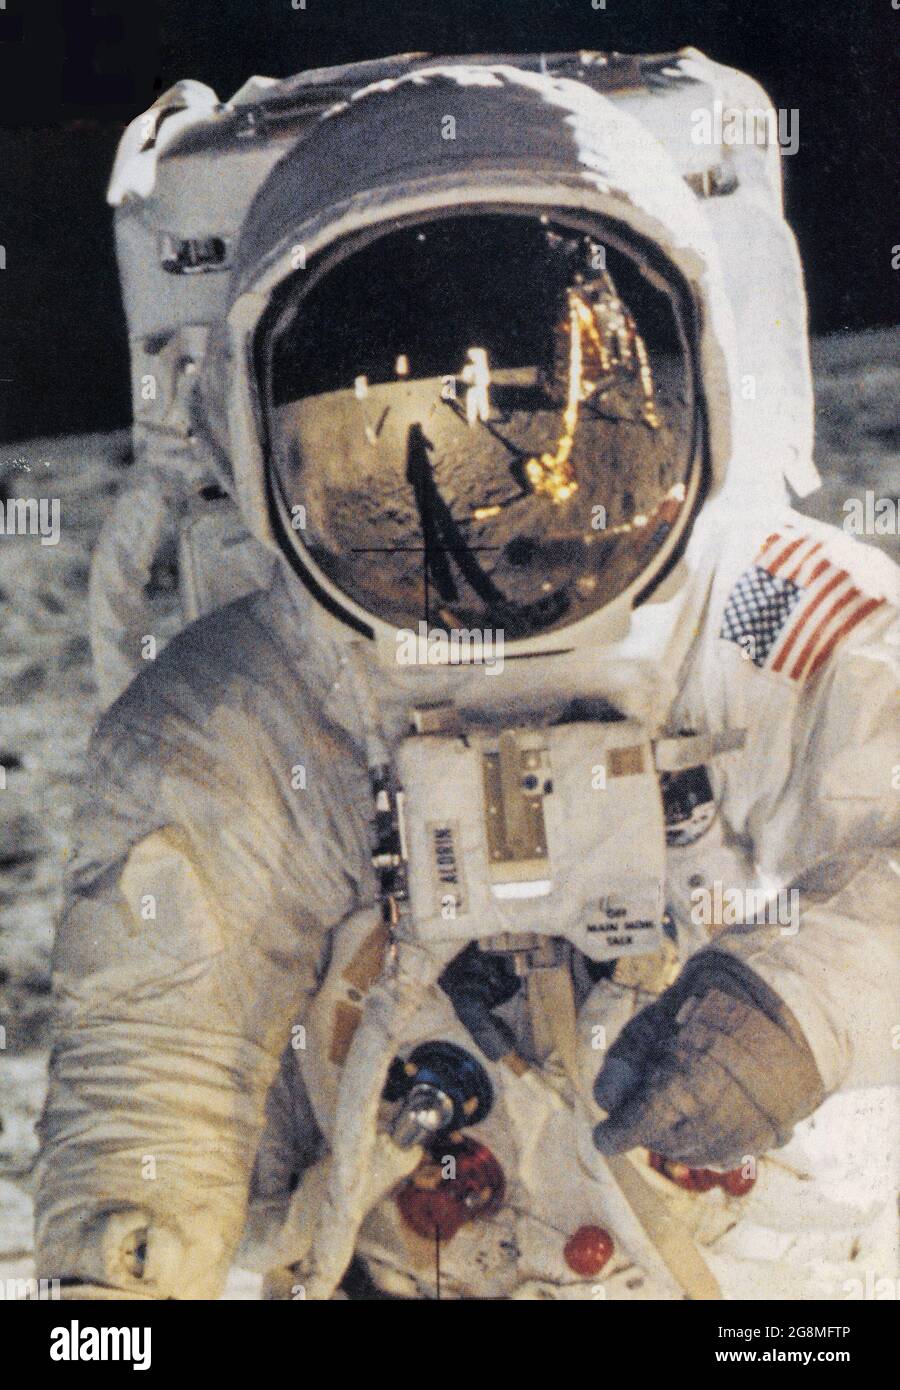 Astronaut Edwin E. Aldrin (aka Buzz Aldrin), walks on the moon, in a photograph taken by Neil Armstrong on 21 July 1969 Stock Photo